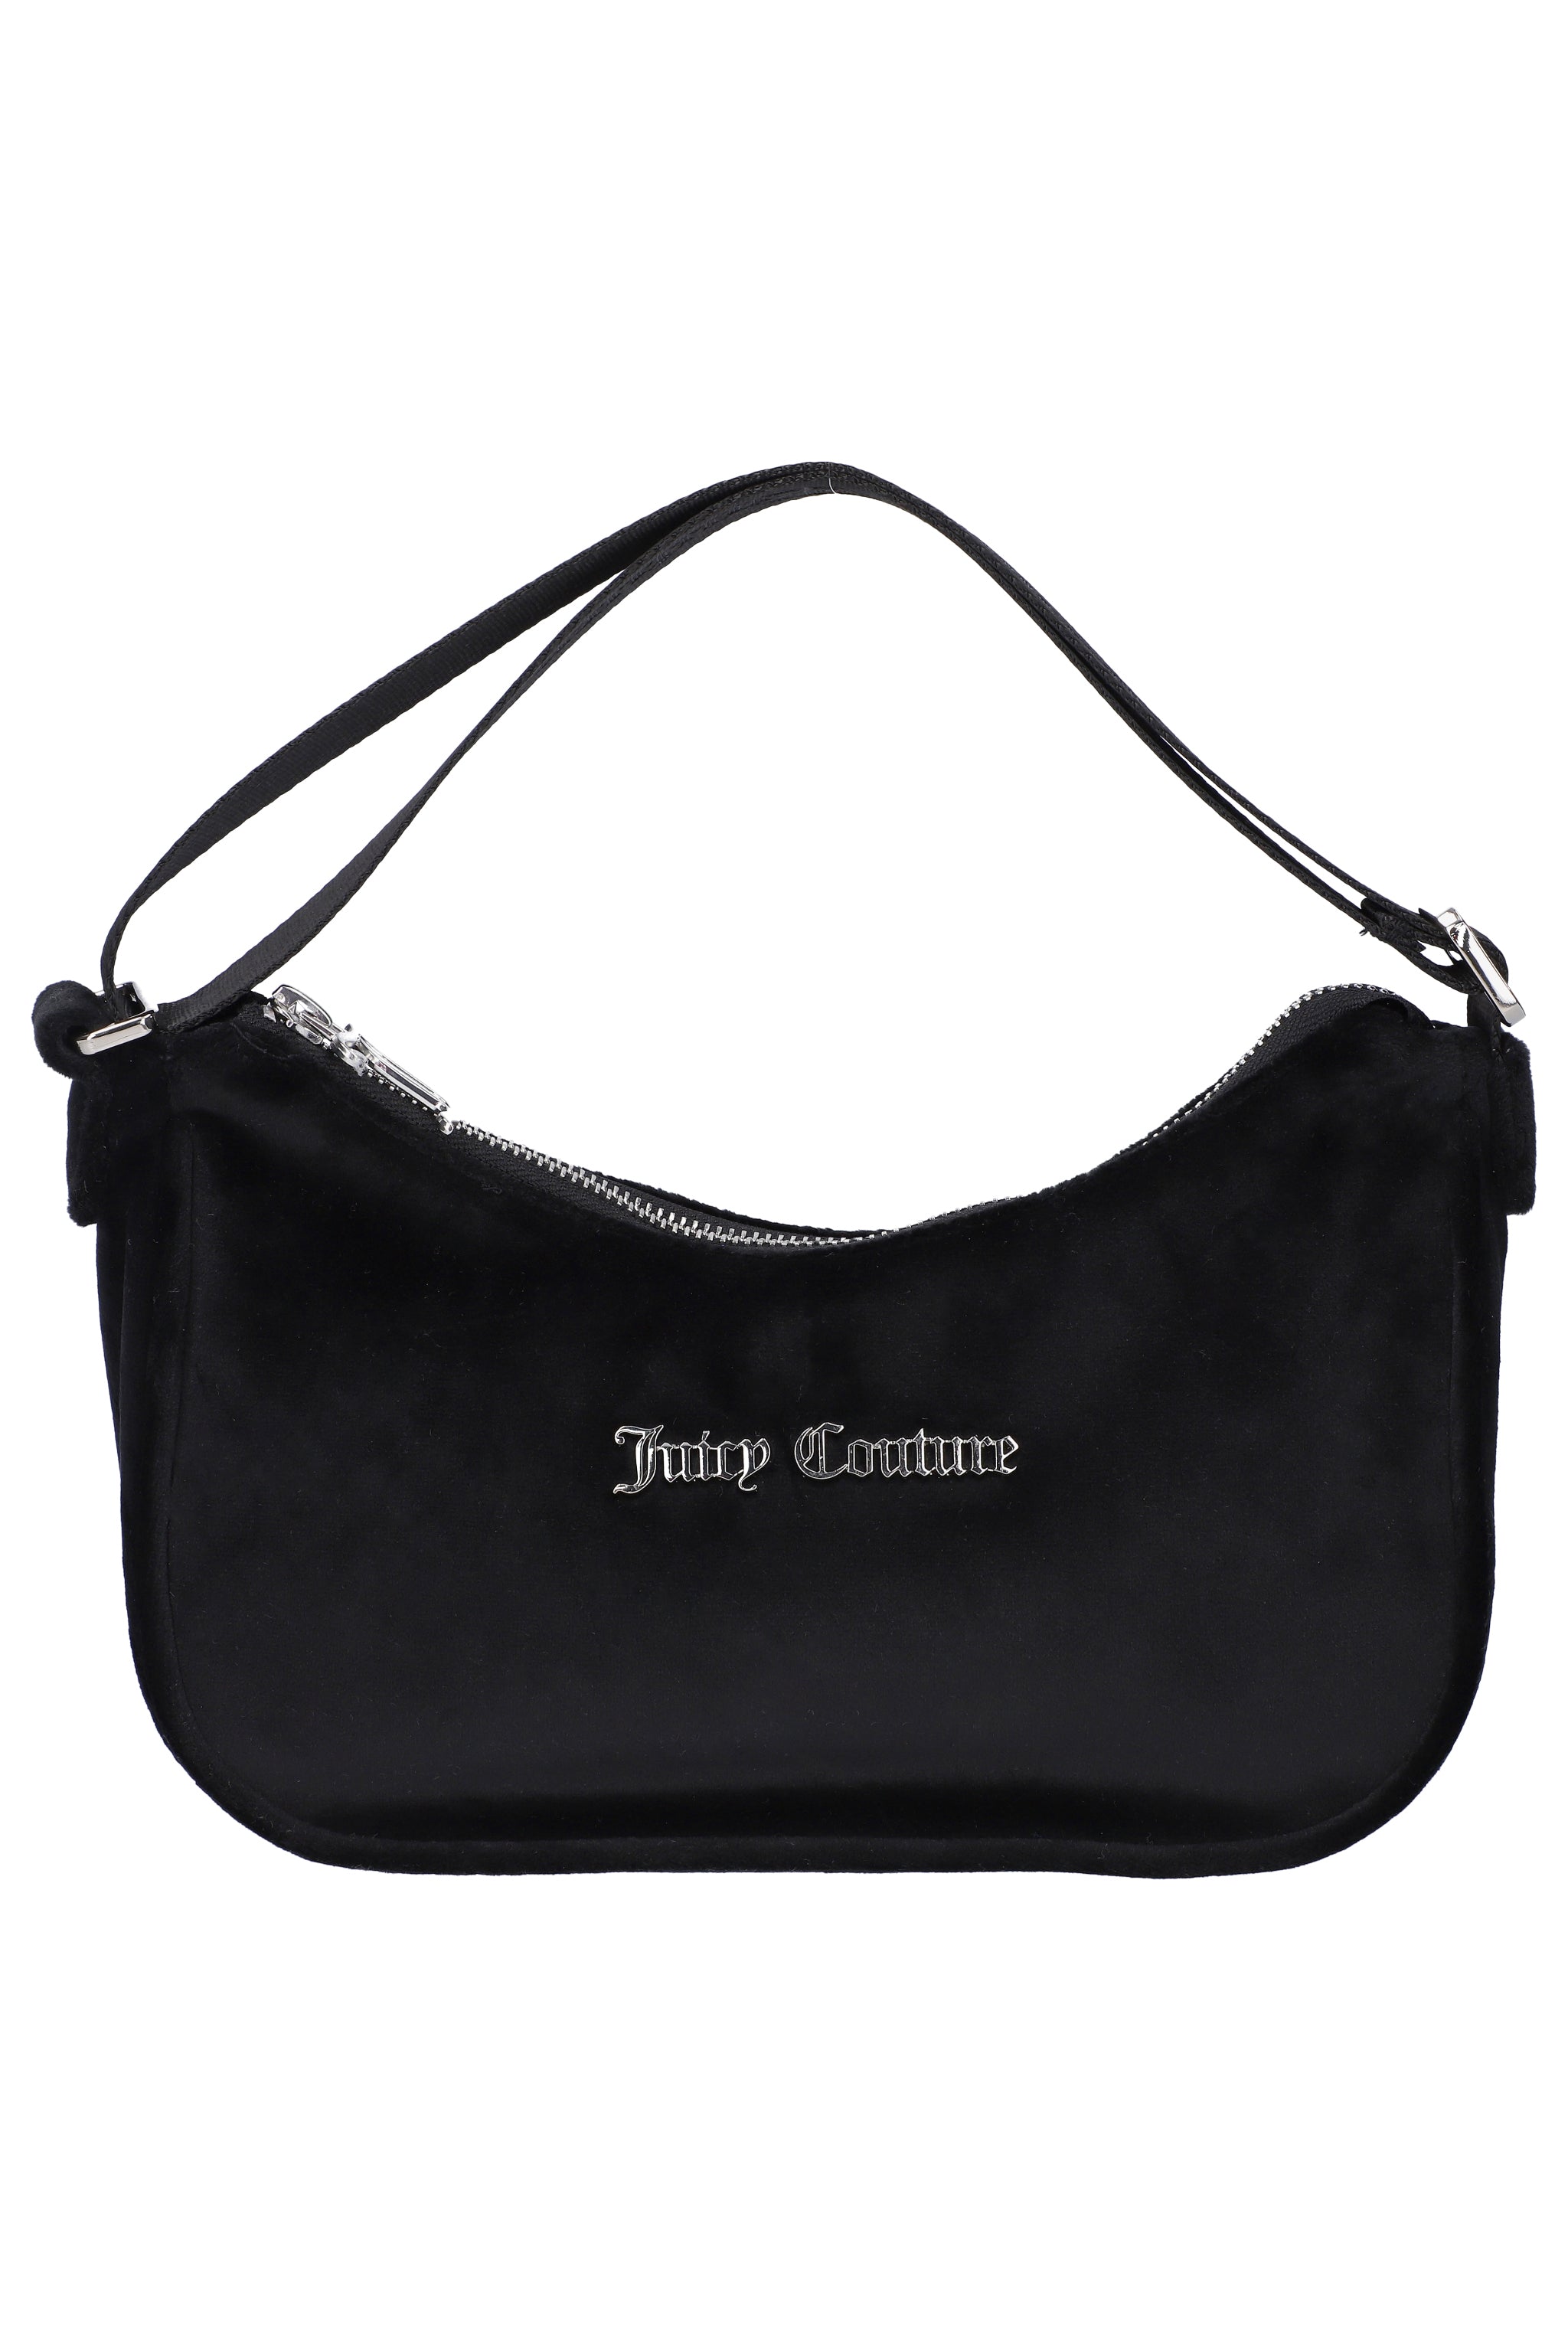 Juicy Couture | Bags, Shoulder bag, Velour bag